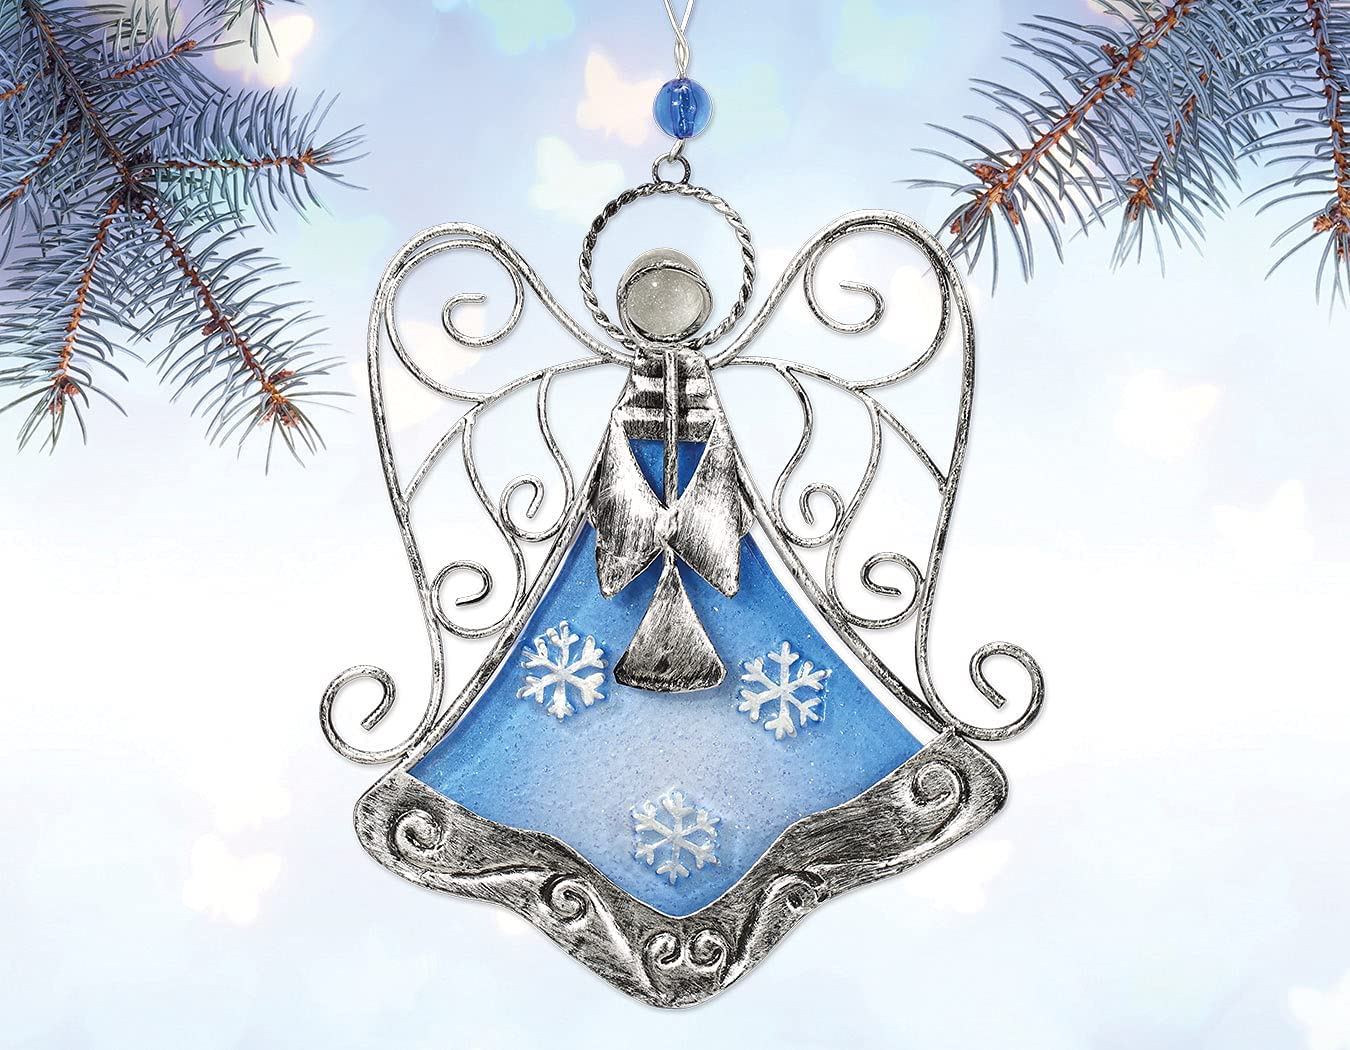 Christmas Angel Holiday Ornament Metal n Glass Hanging Seasonal Decoration